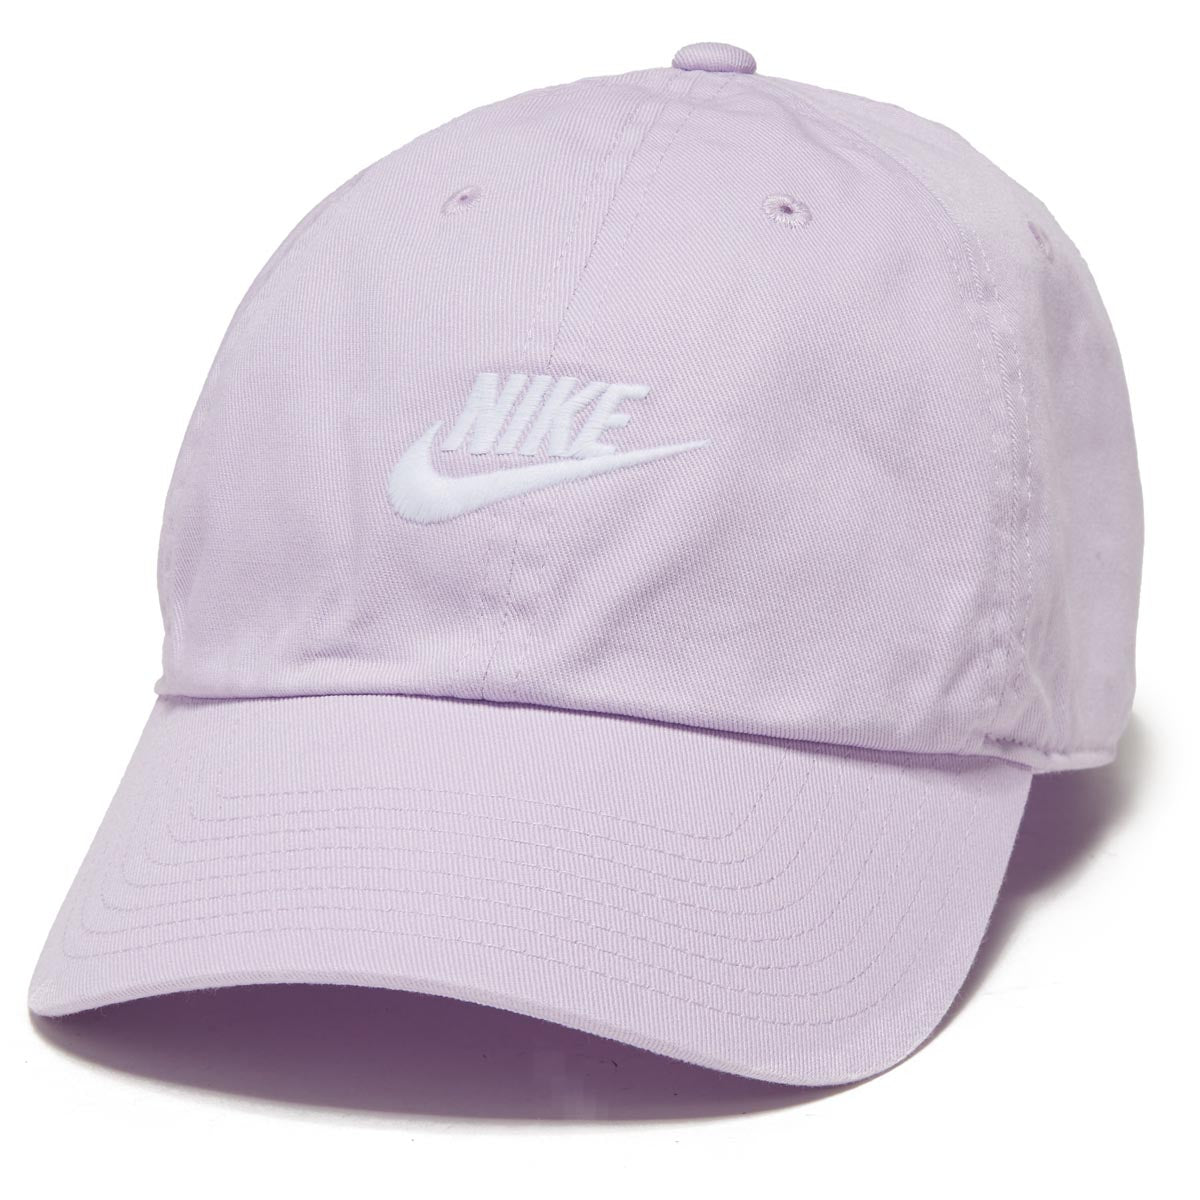 Nike SB Club Hat - Violet Mist/White image 1